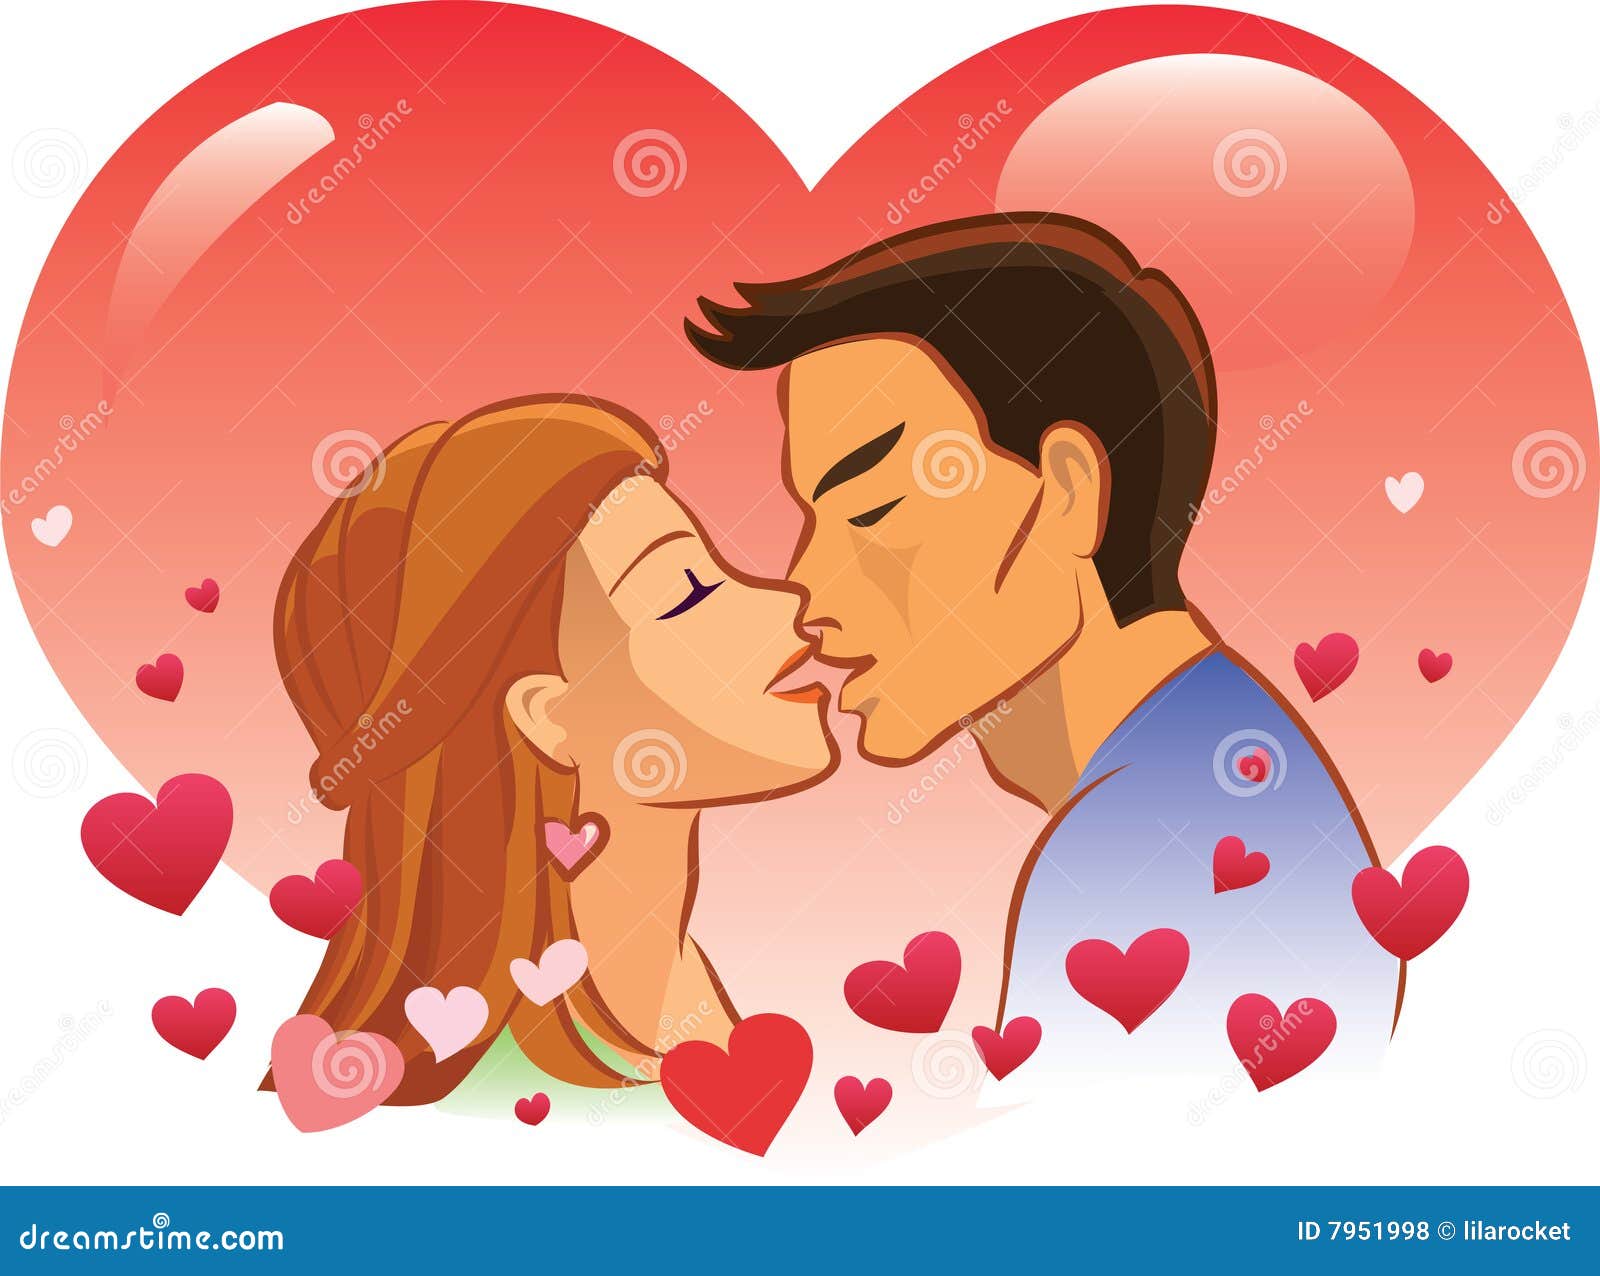 St. Valentine s Day Kiss stock vector. Illustration of female ...